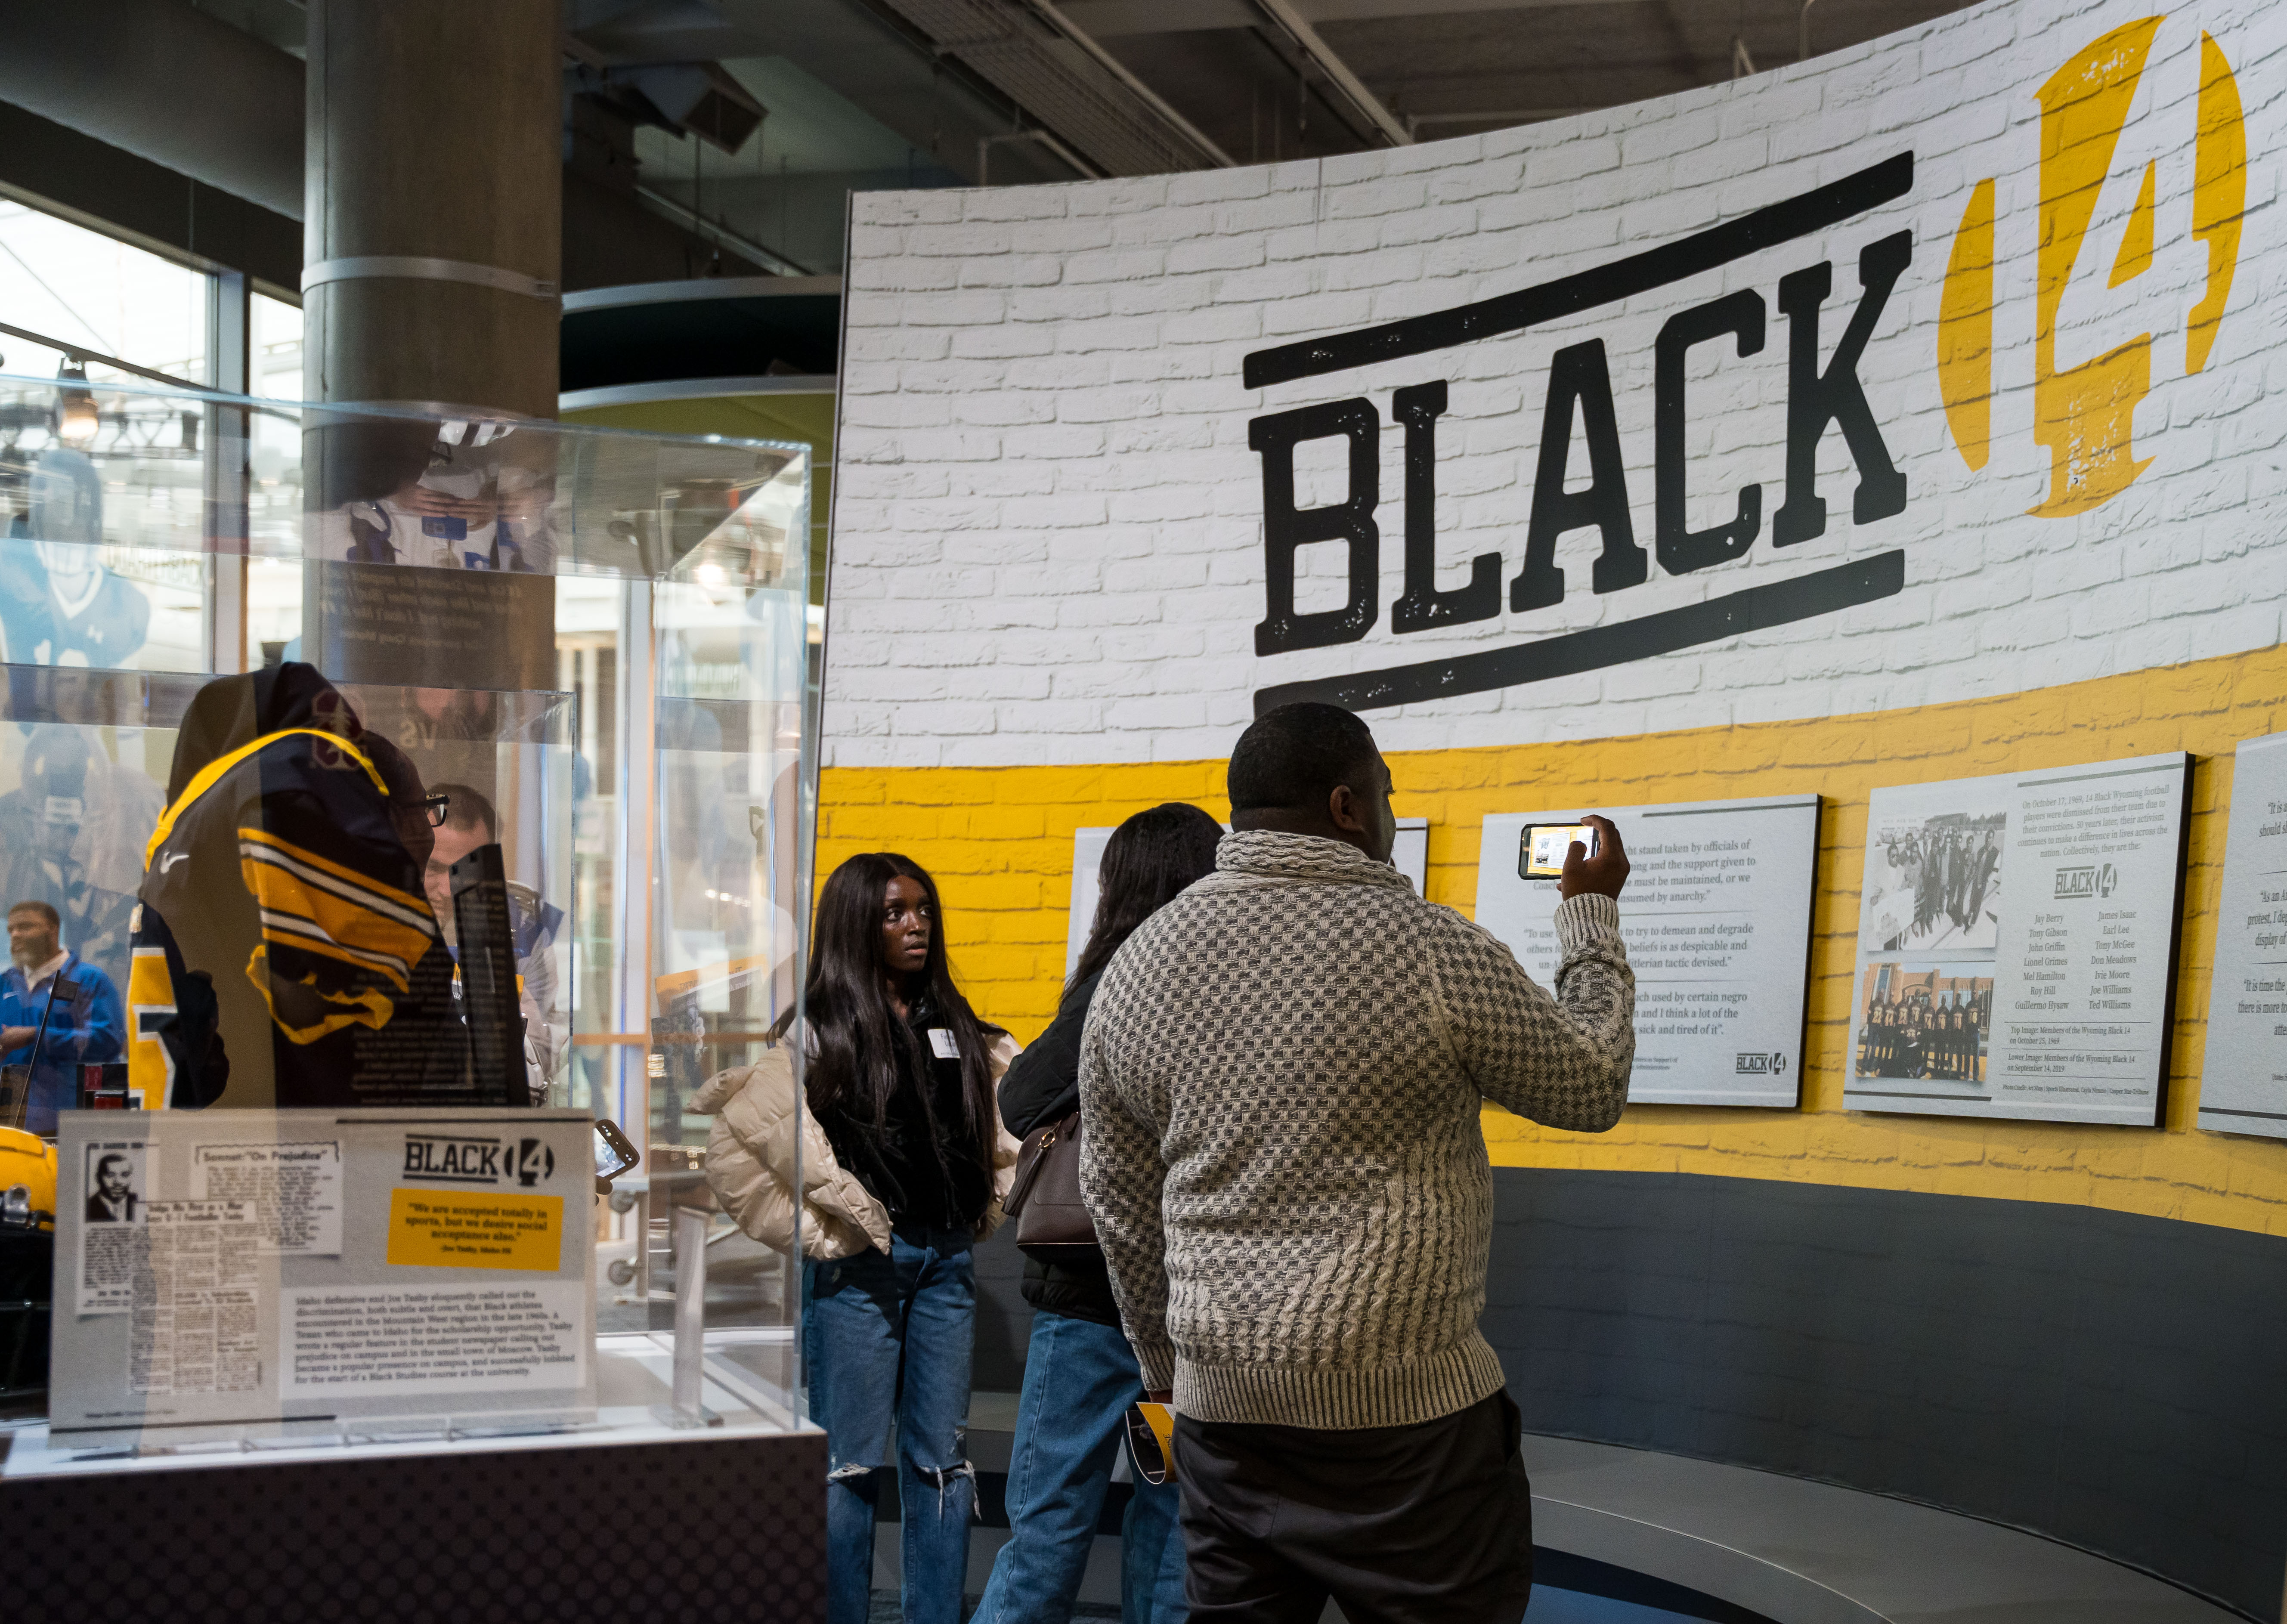 Special Exhibition: The Black 14 Display